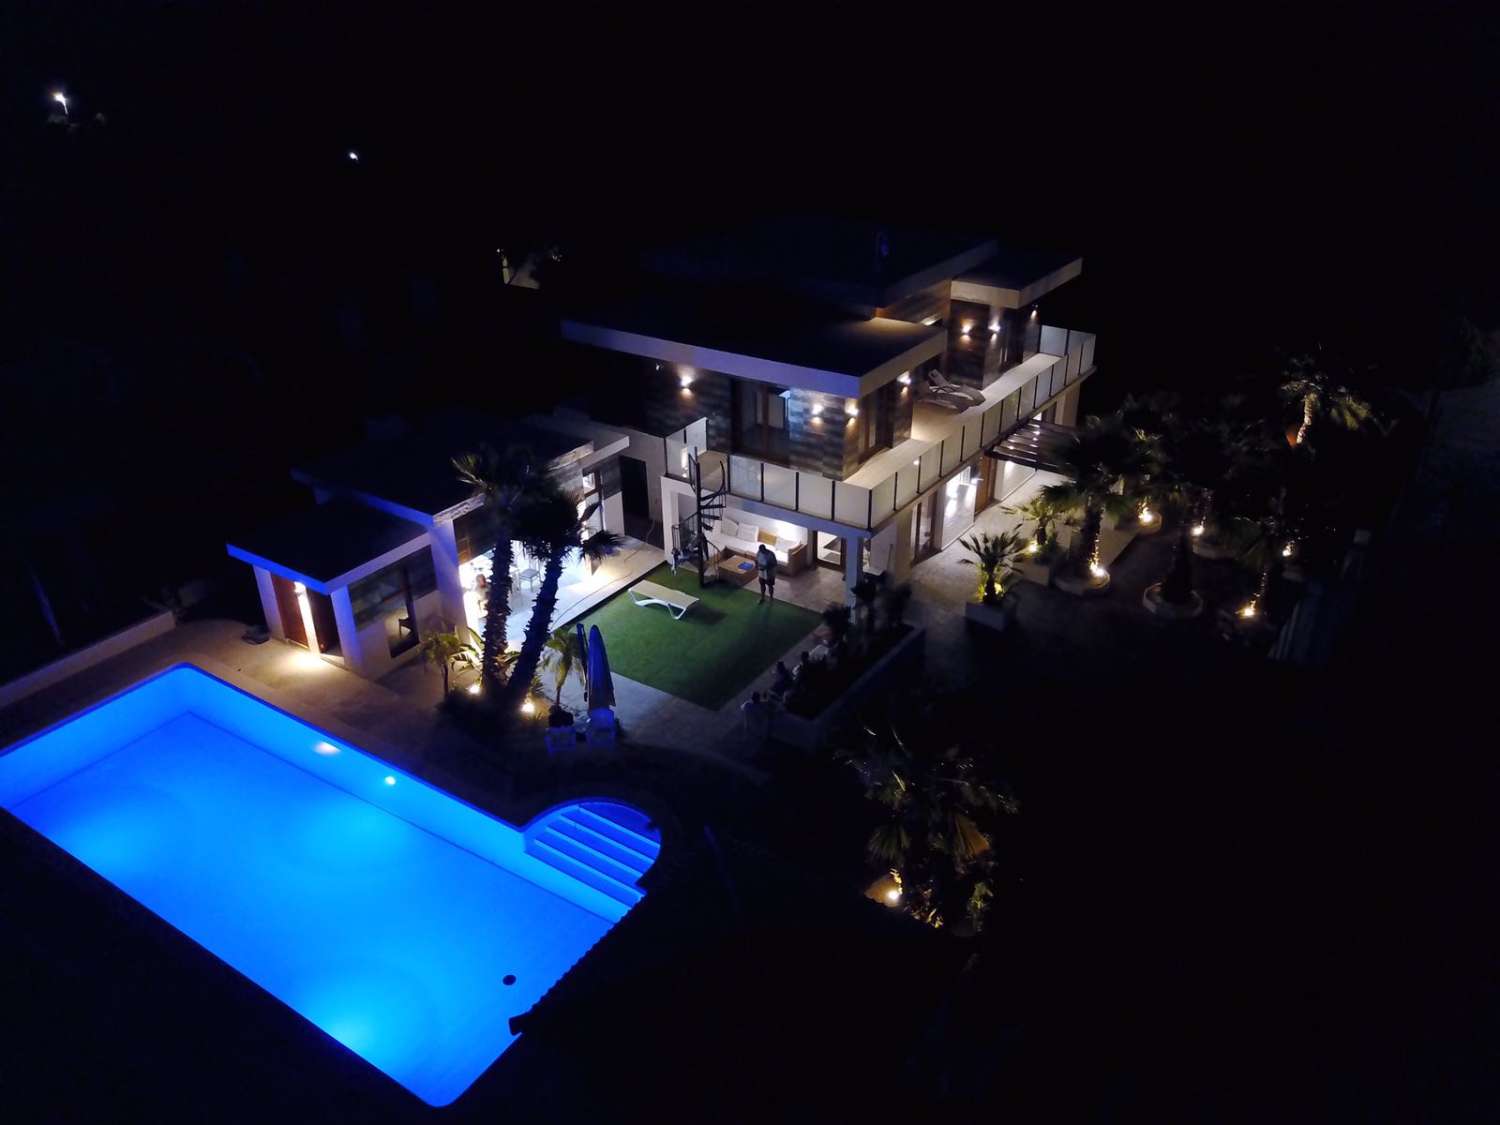 Großes modernes Haus mit Meerblick und großem privaten Pool!